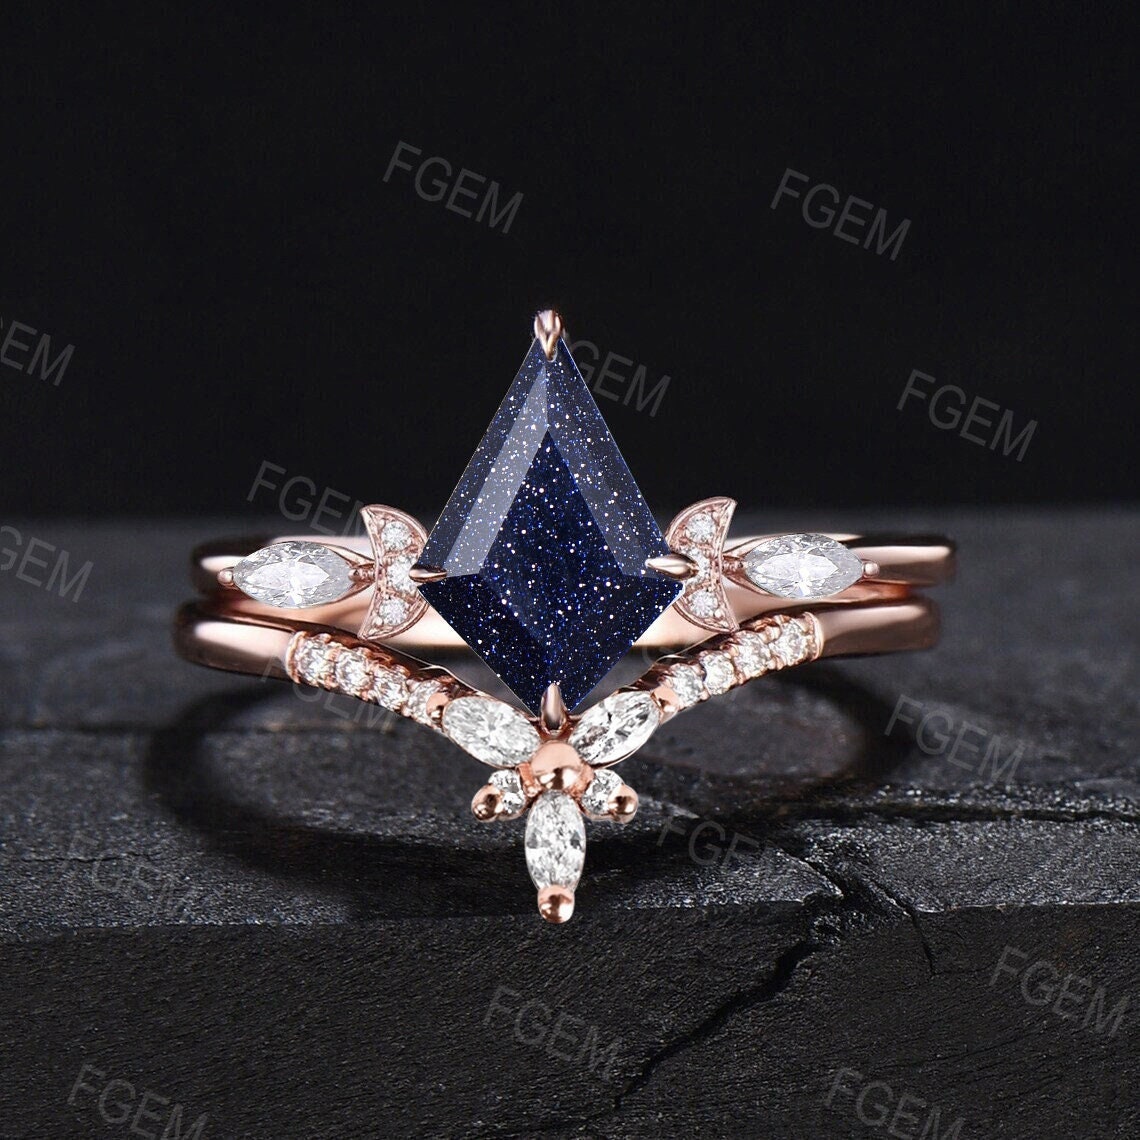 Moon - 14k White Gold 1.5 Carat Round 3 Stone Natural Diamond Engagement  Ring @ $2575 | Gabriel & Co.